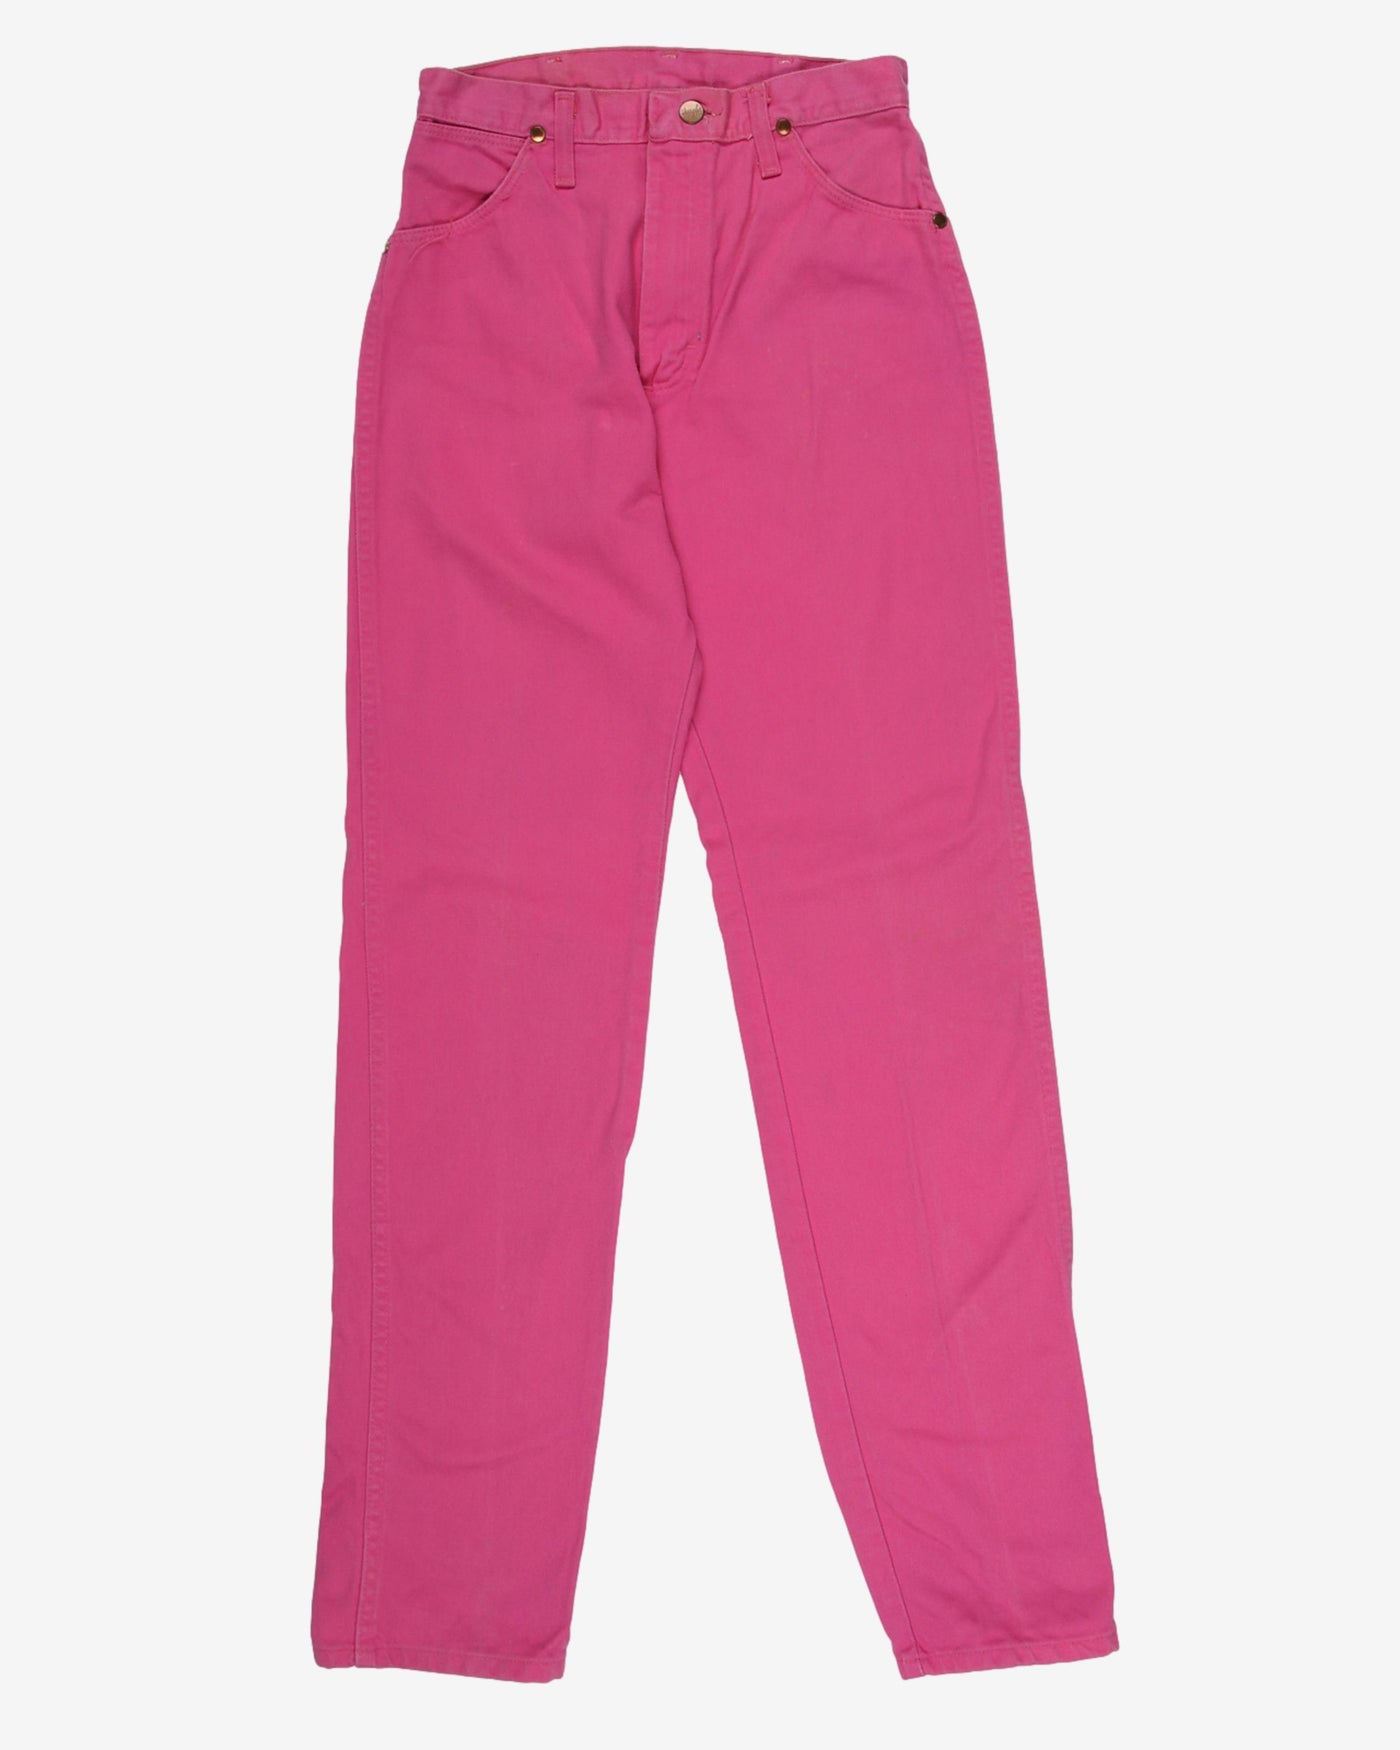 Wrangler 80s Fuchsia Pink Tapered Mom Denim Jeans - W27 L33